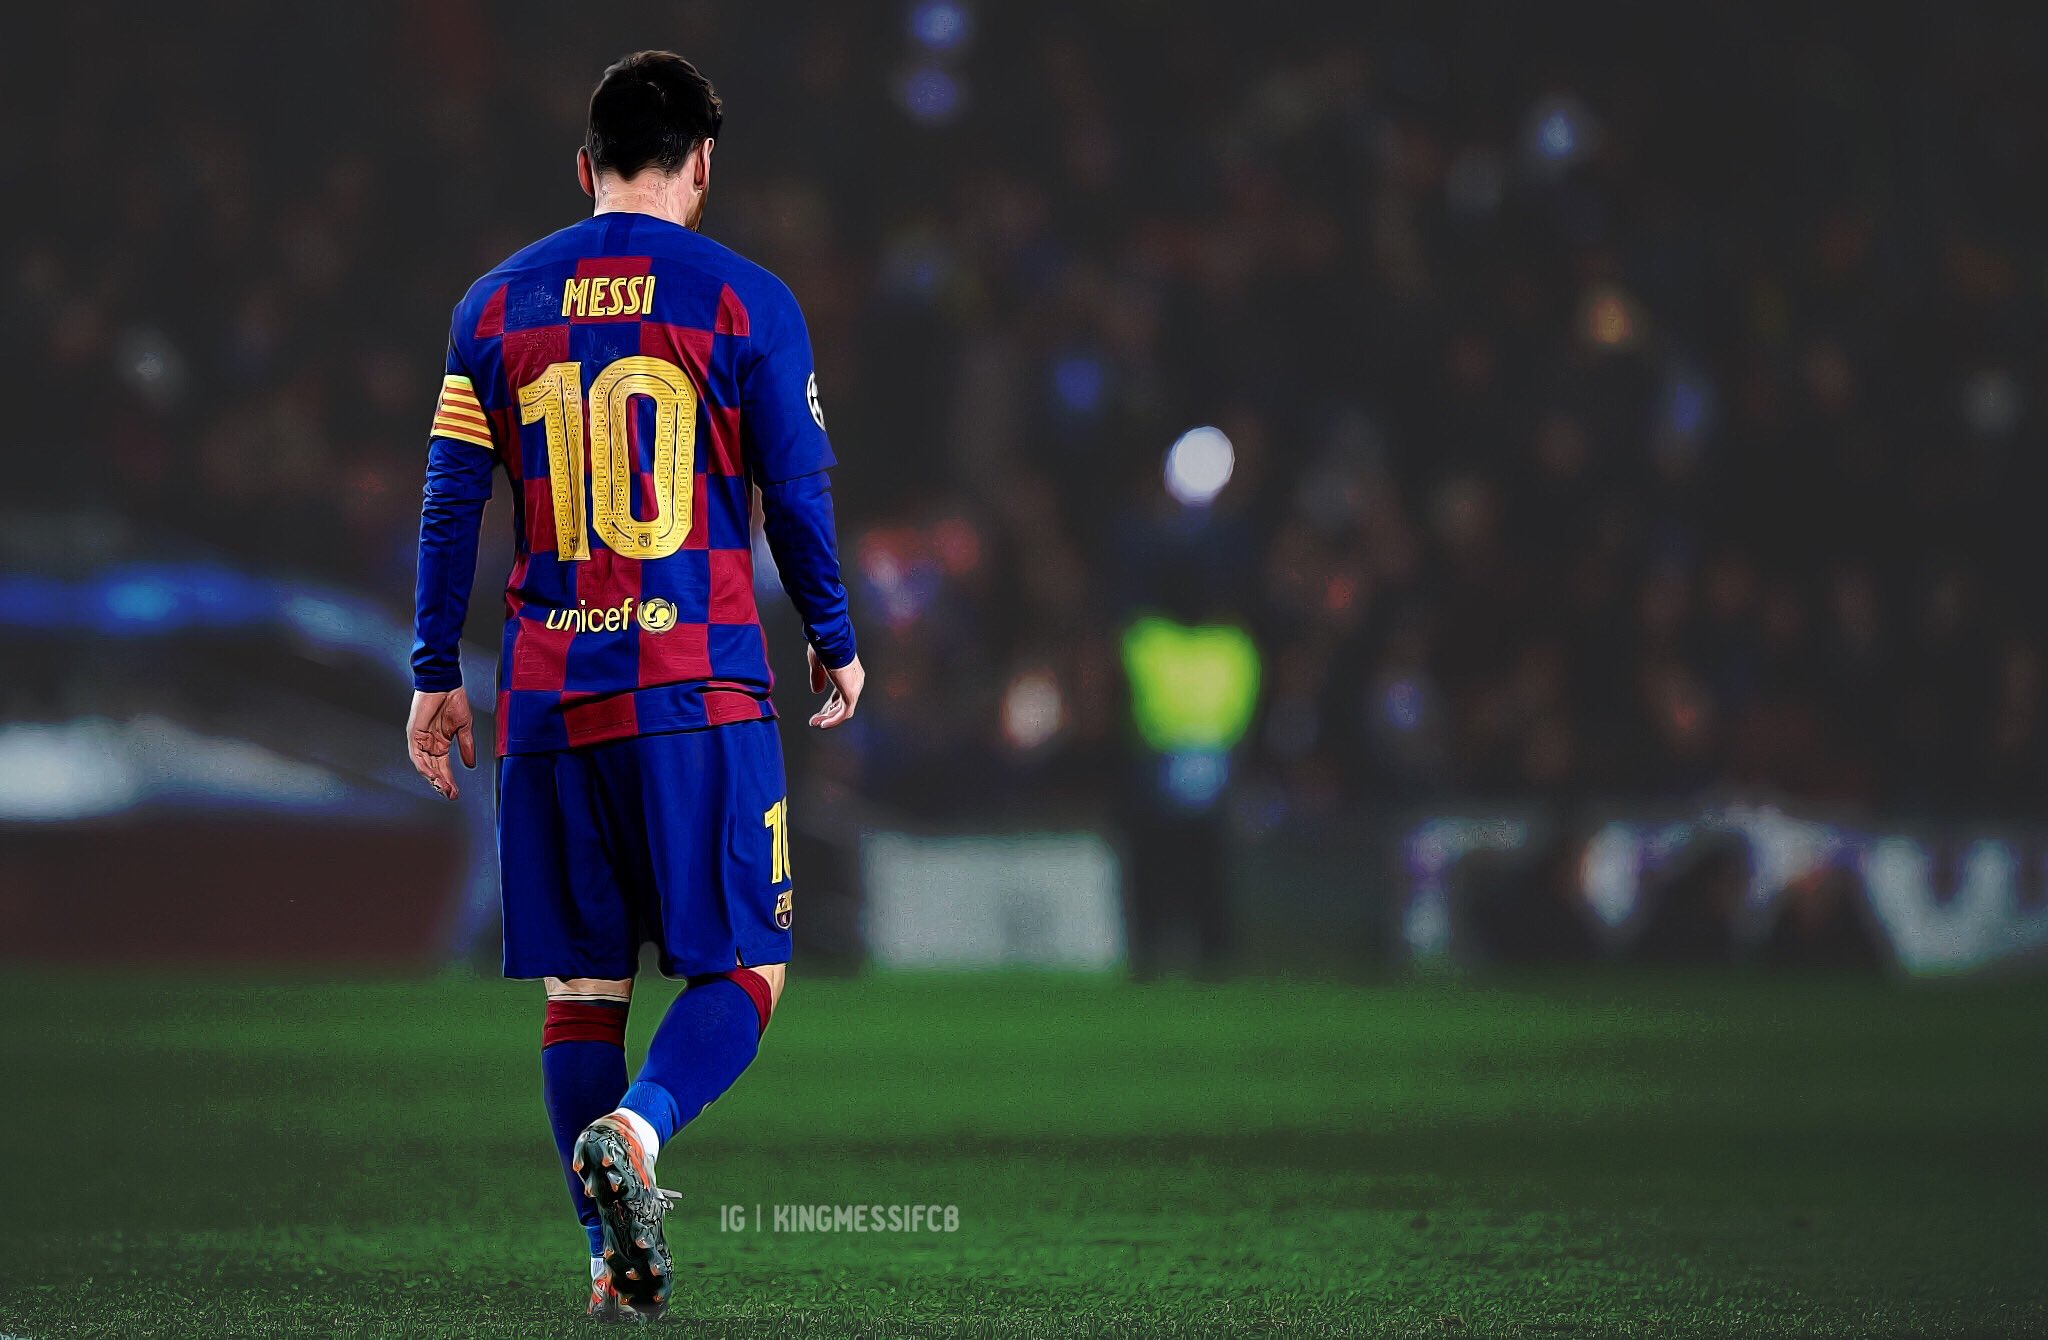 Messi Wallpapers (@kingmessifcb_WP) / Twitter